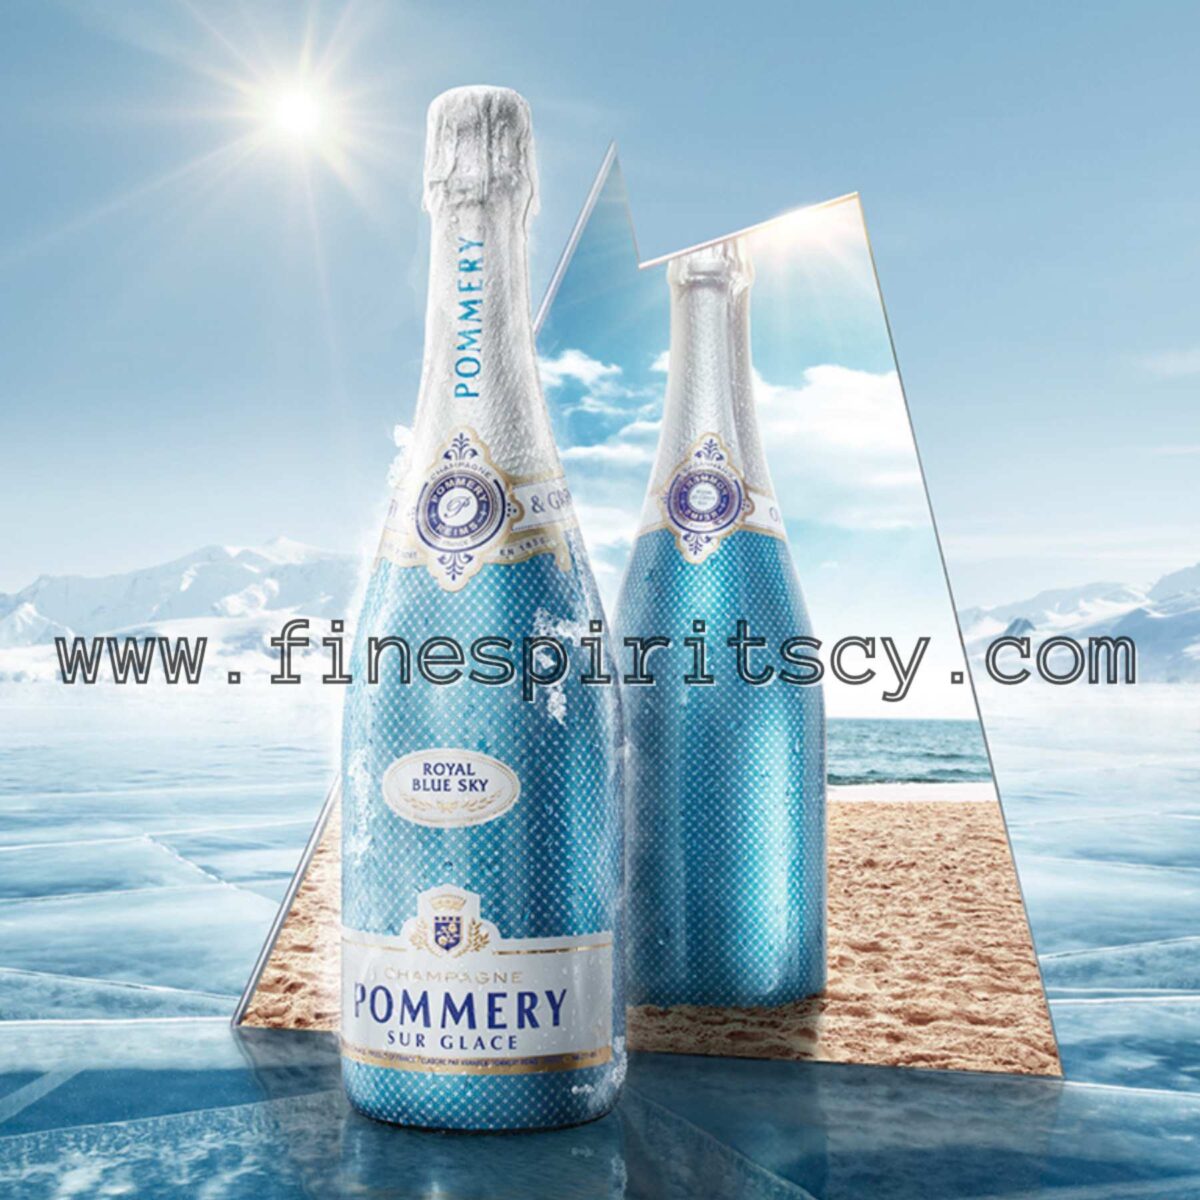 Pommery Royal Blue Sky Wine Cyprus Champagne Best Fine Spirits CY